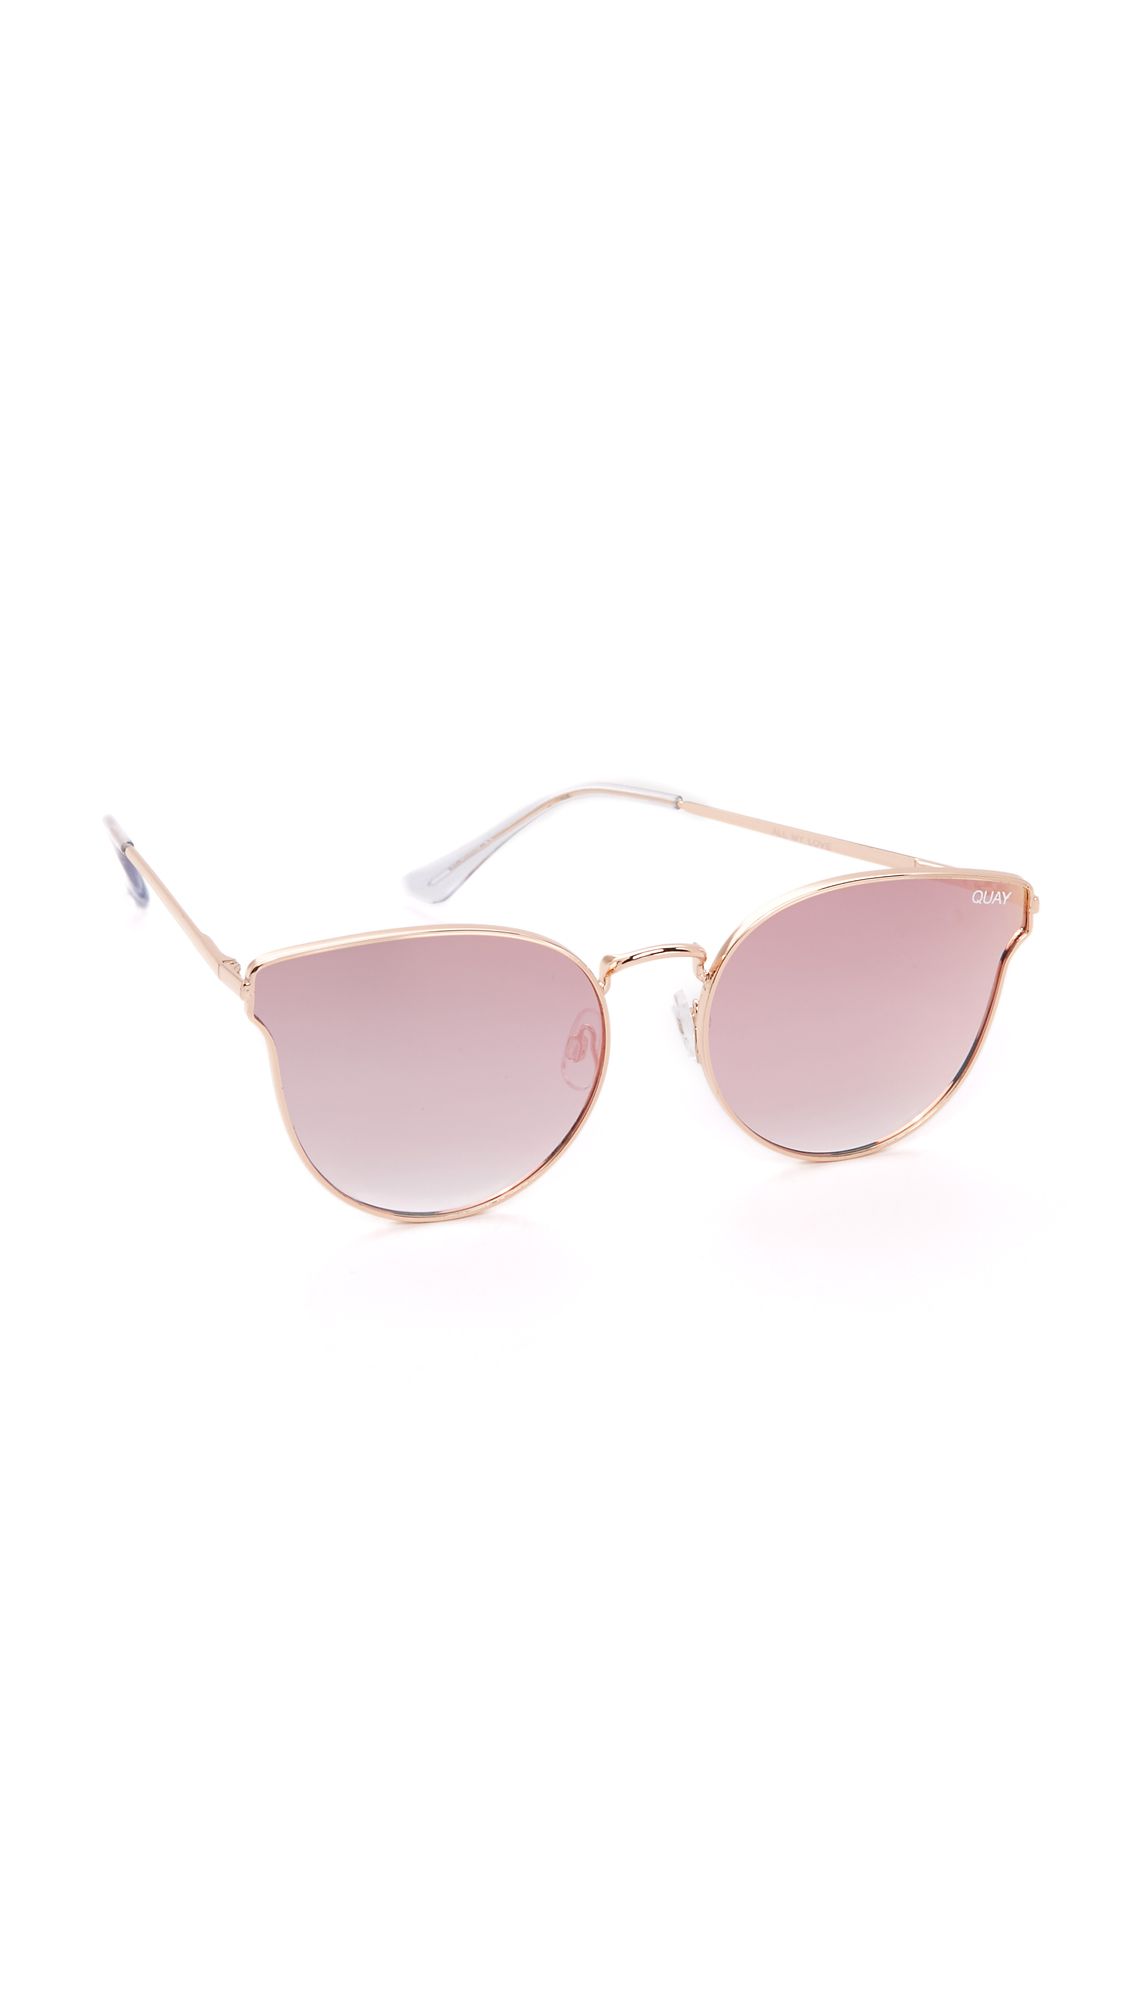 All My Love Sunglasses | Shopbop